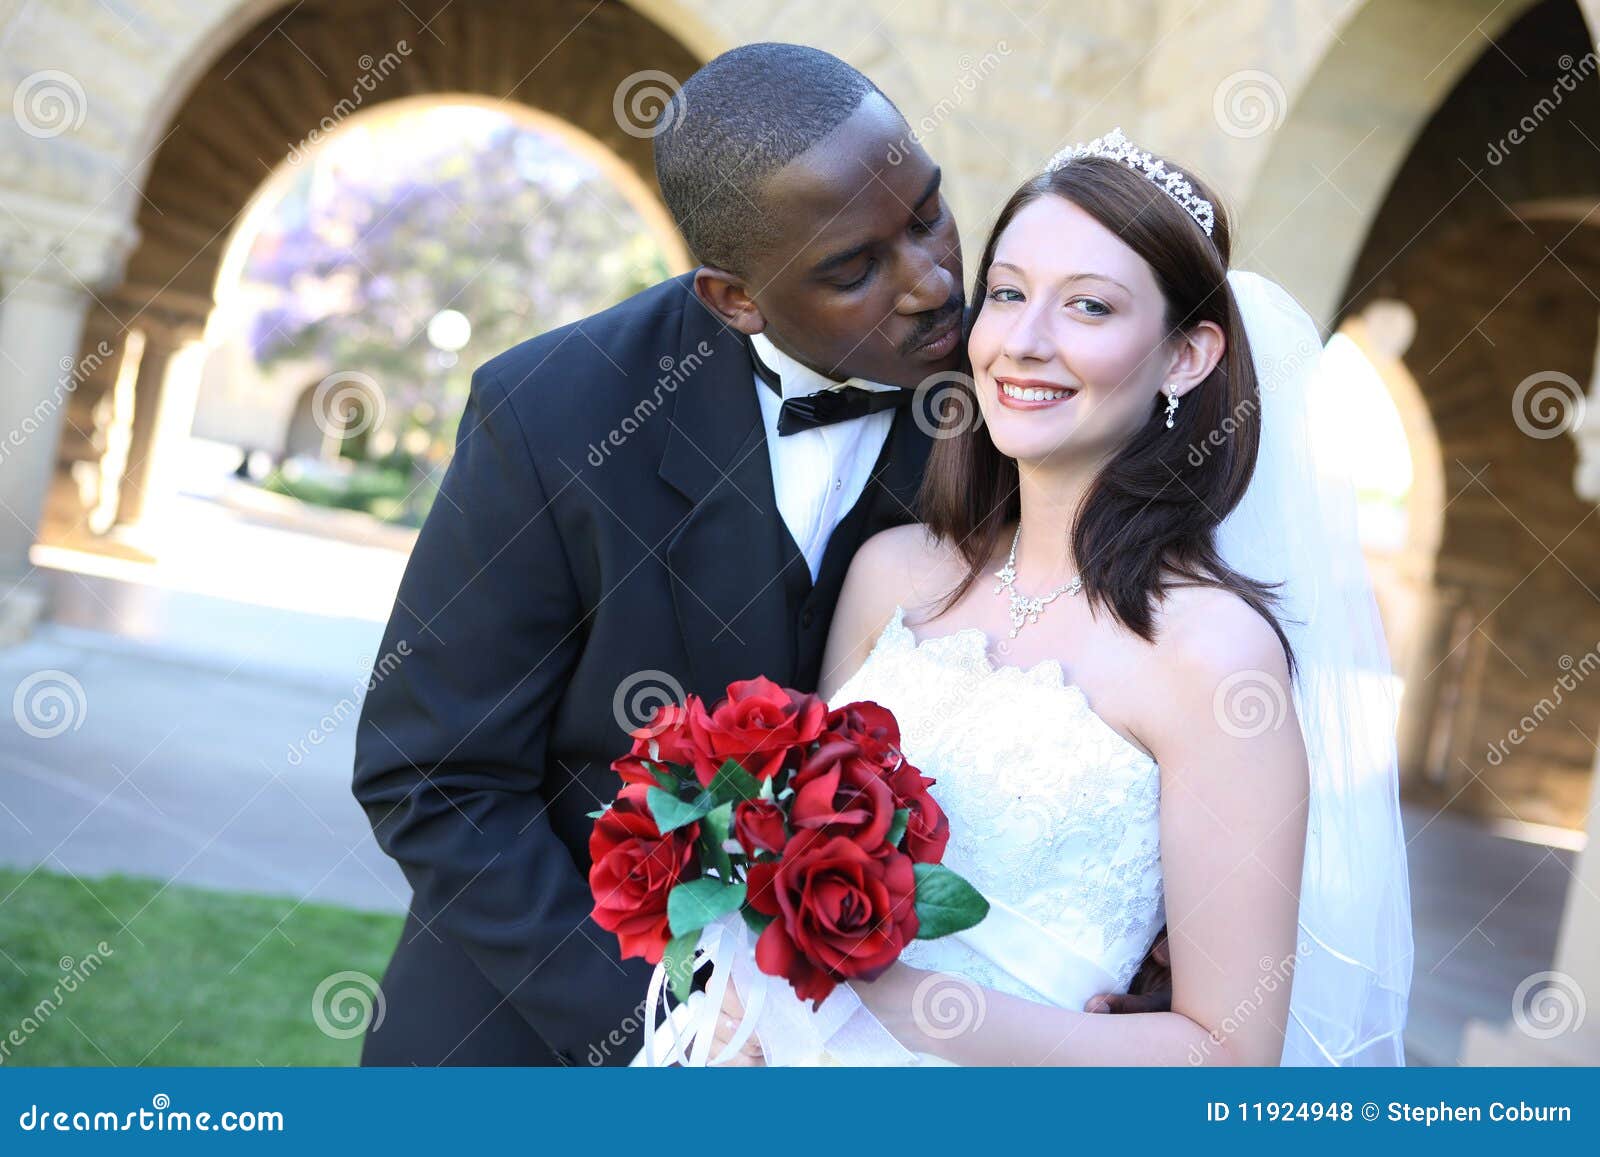 attractive interracial wedding couple kissing